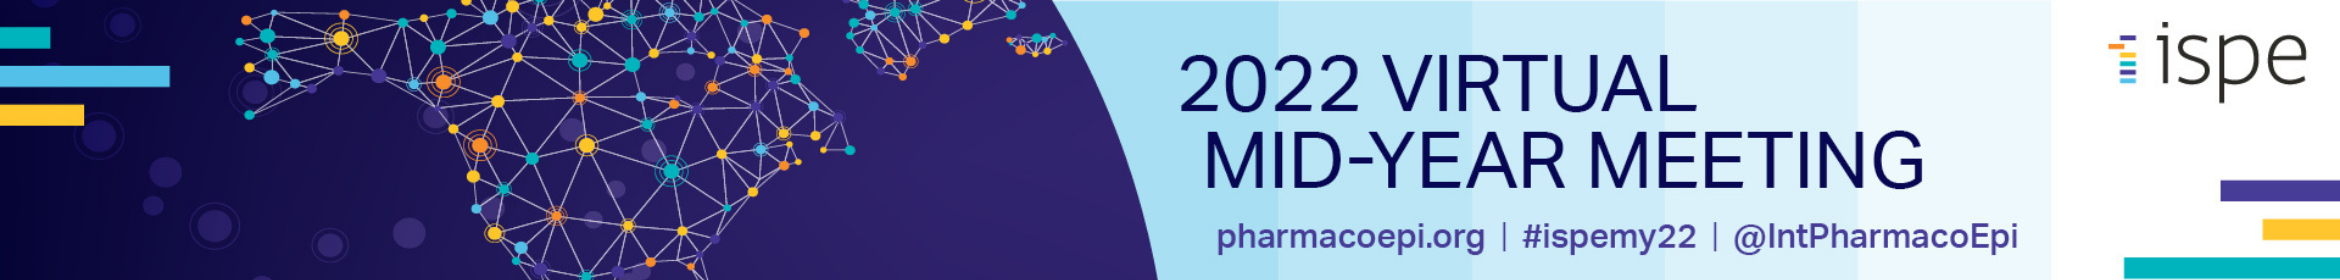 Mid-Year Meeting 2022 Main banner